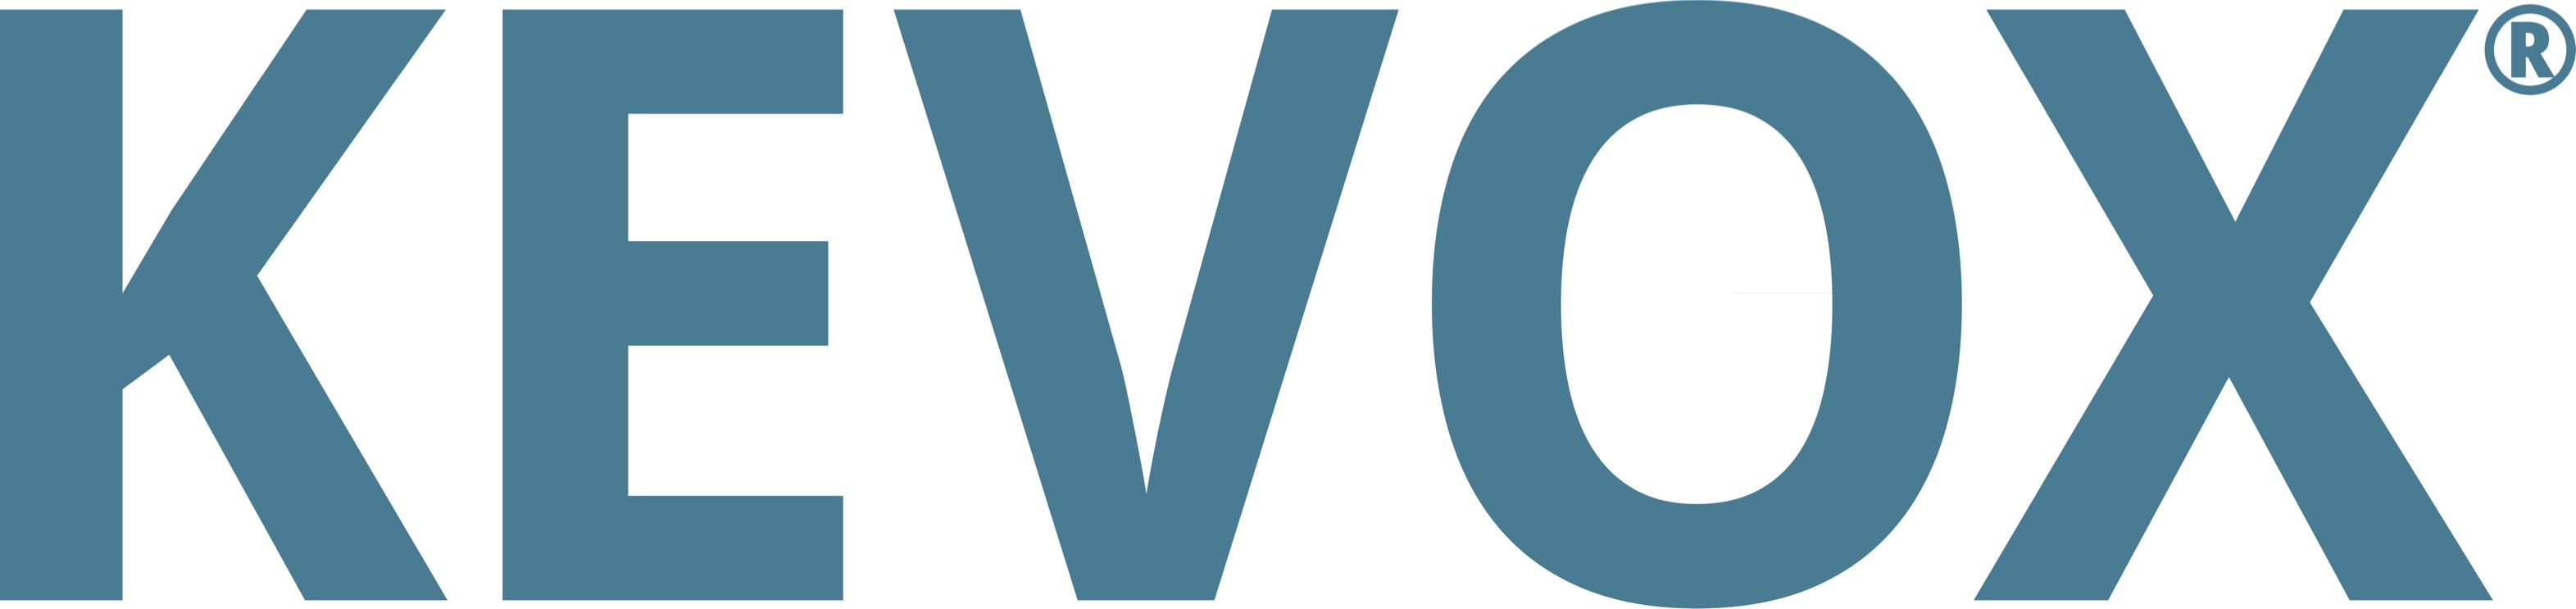 KEVOX_logo_groß_software